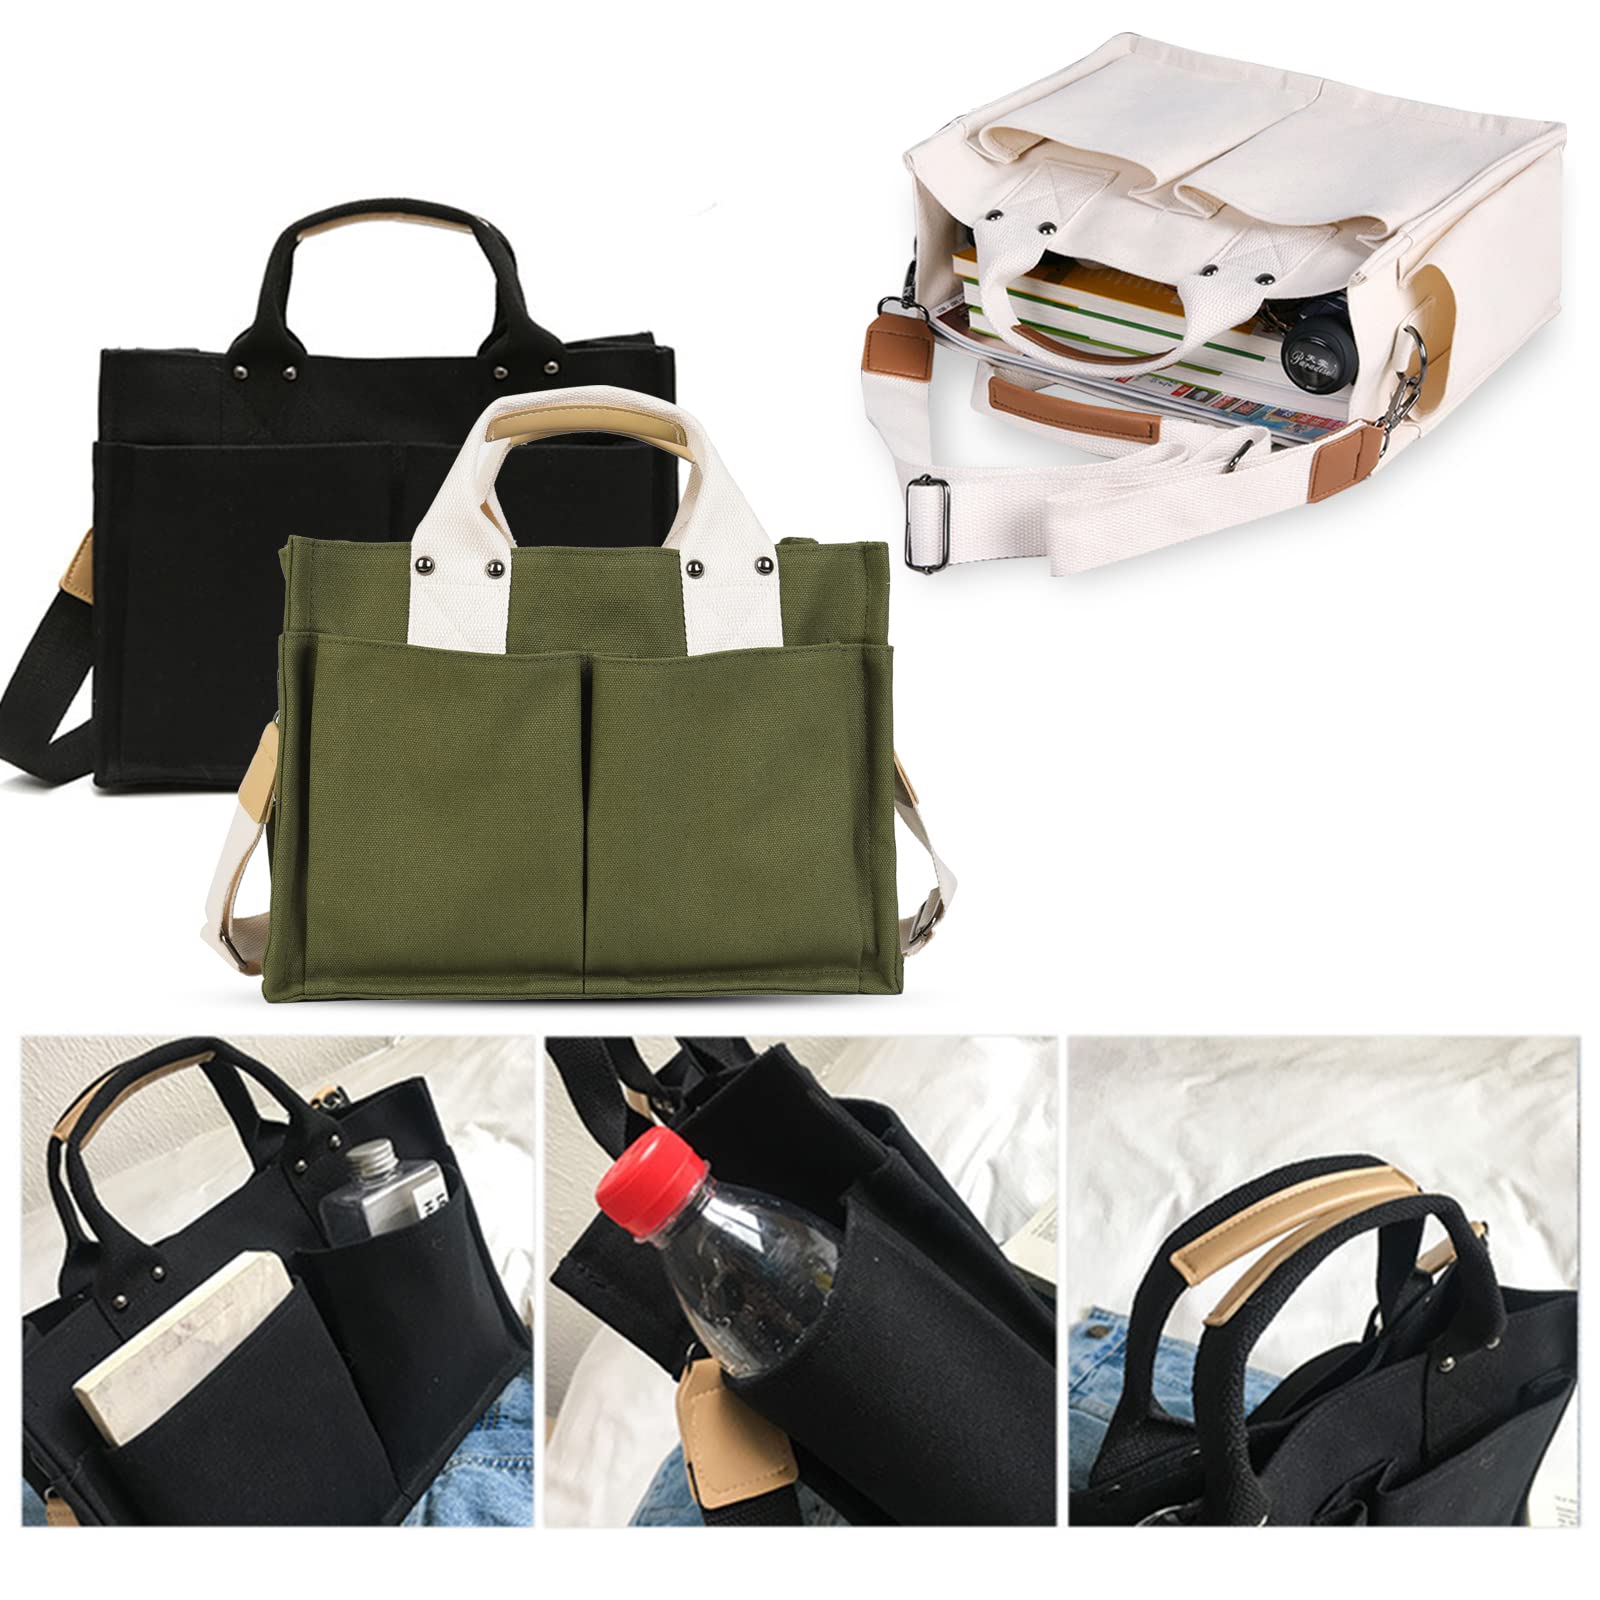 Valleycomfy Women's Hobo Handbags Casual Shoulder Hobo Bags Stylish Crossbody Bag Messenger Bag with Multiple Pockets